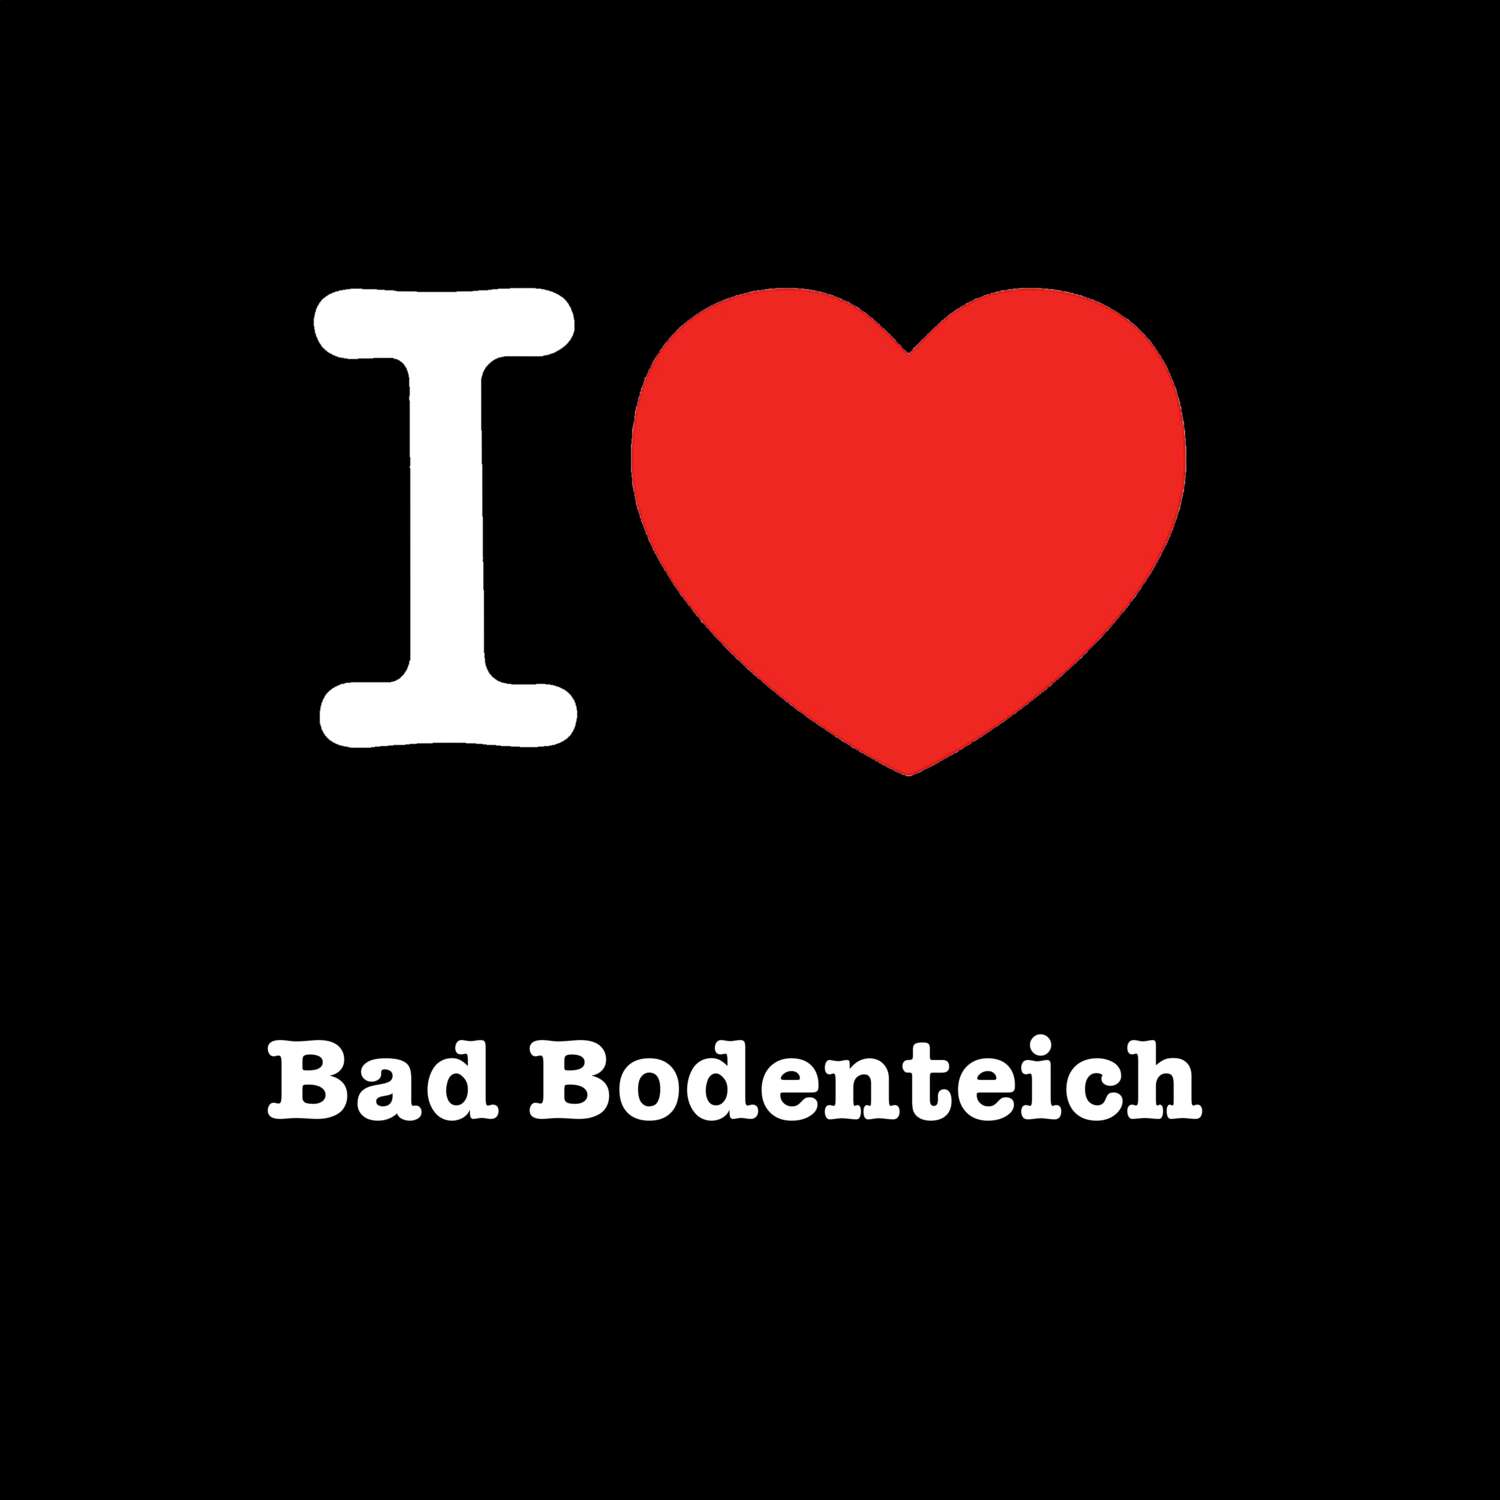 Bad Bodenteich T-Shirt »I love«